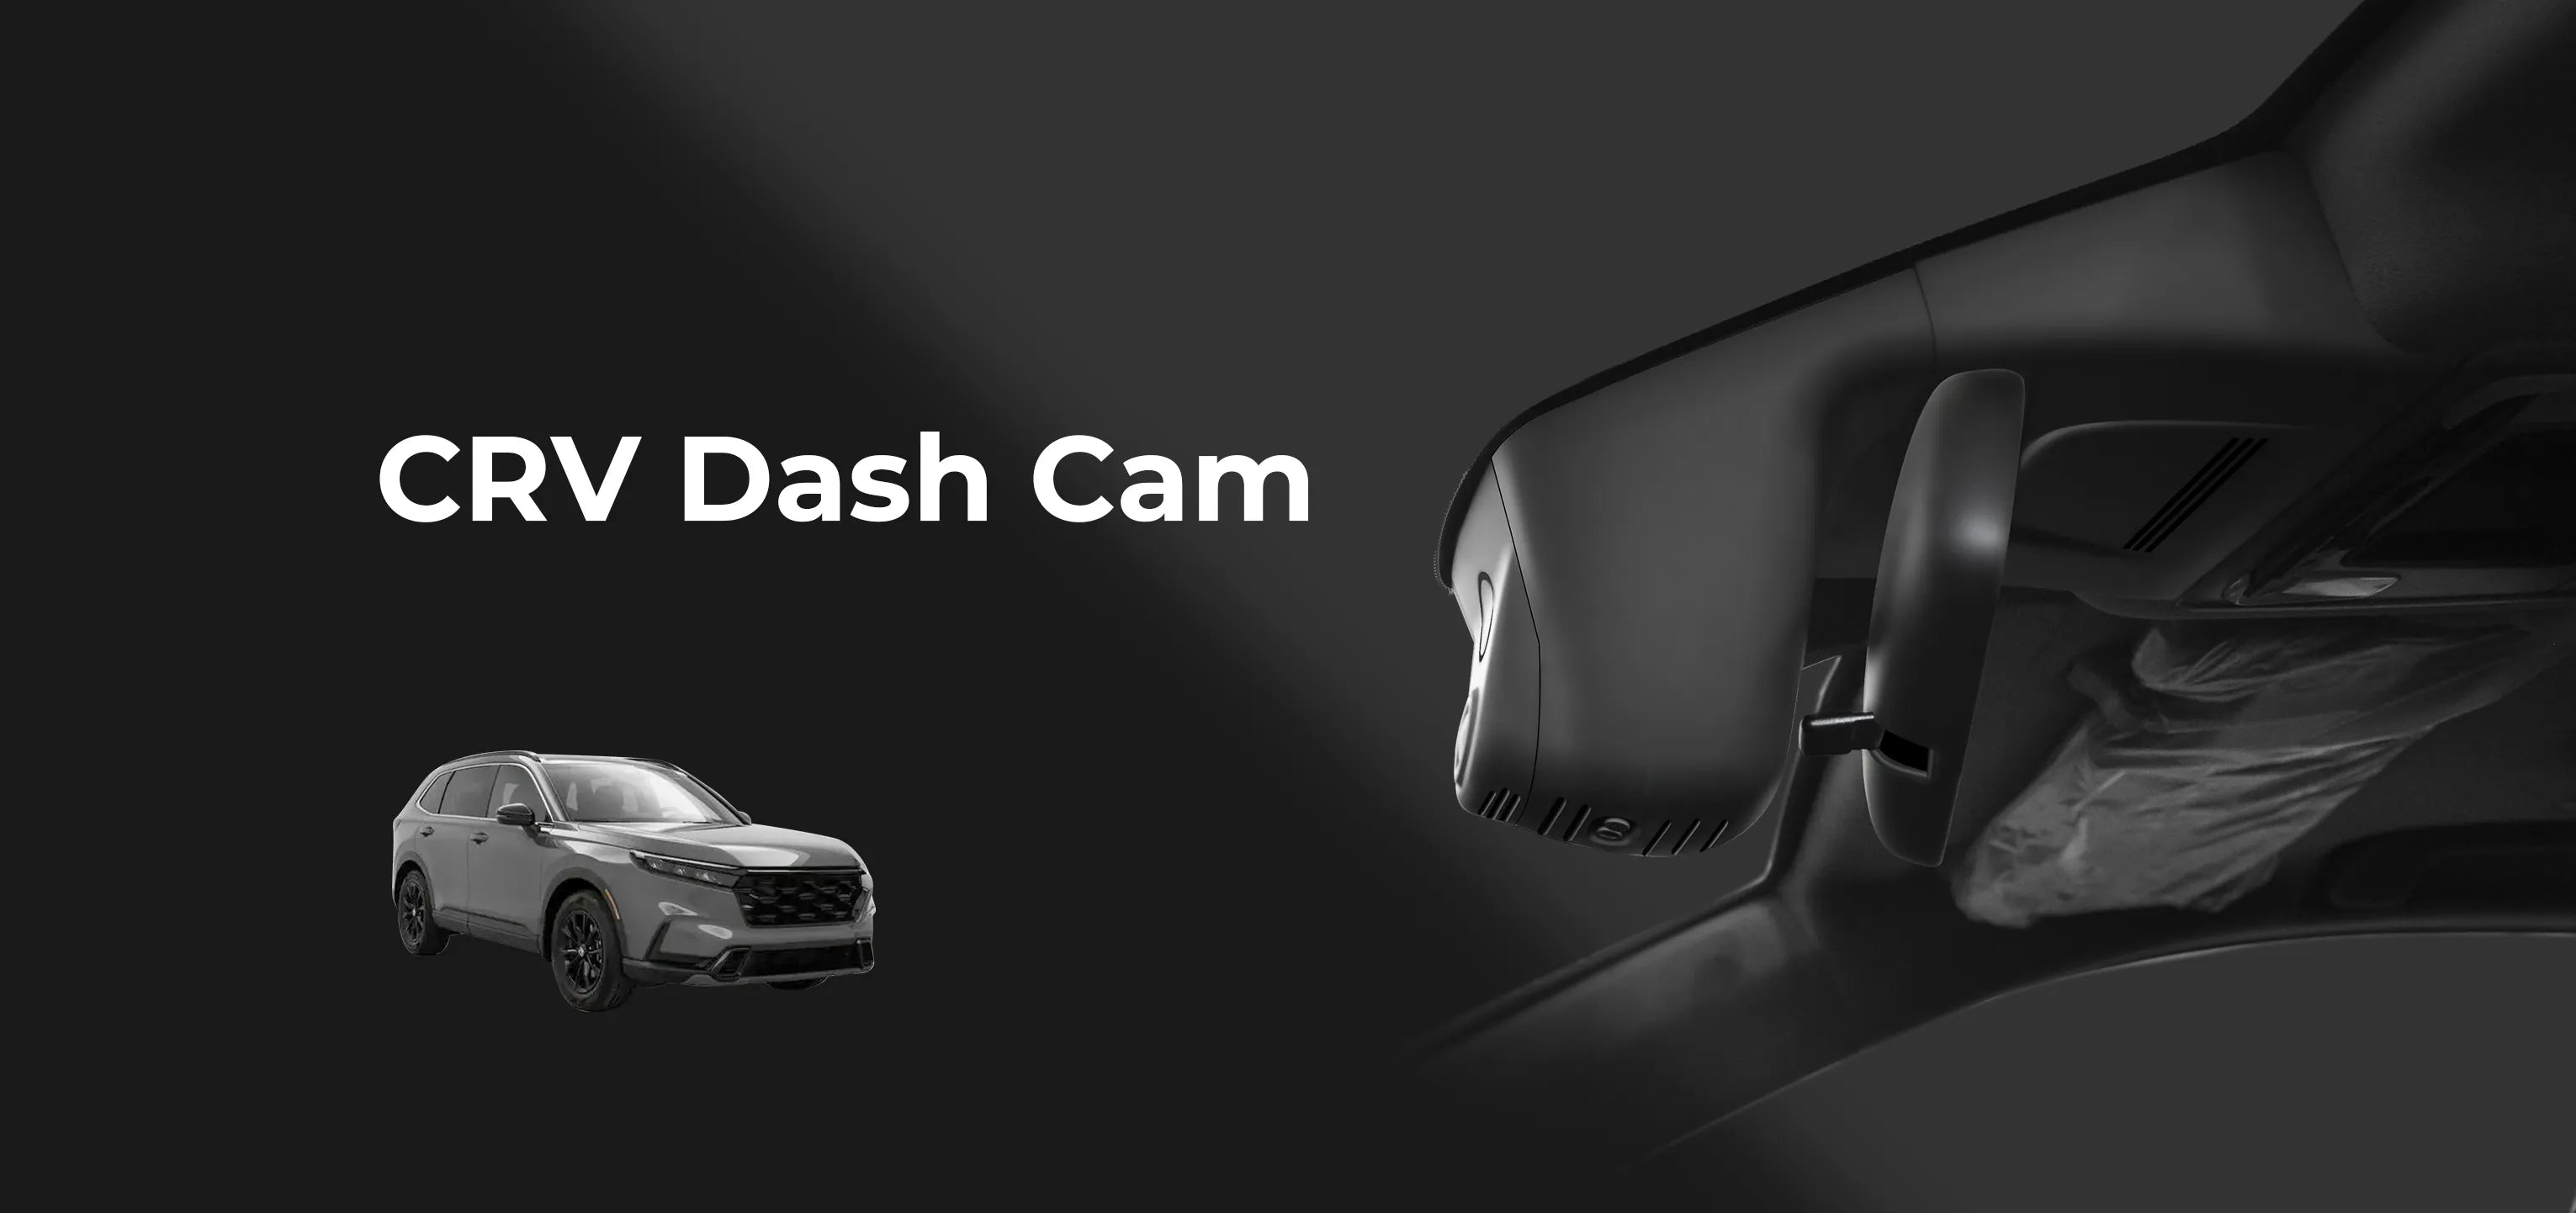 OEM style dash cam for Honda CRV